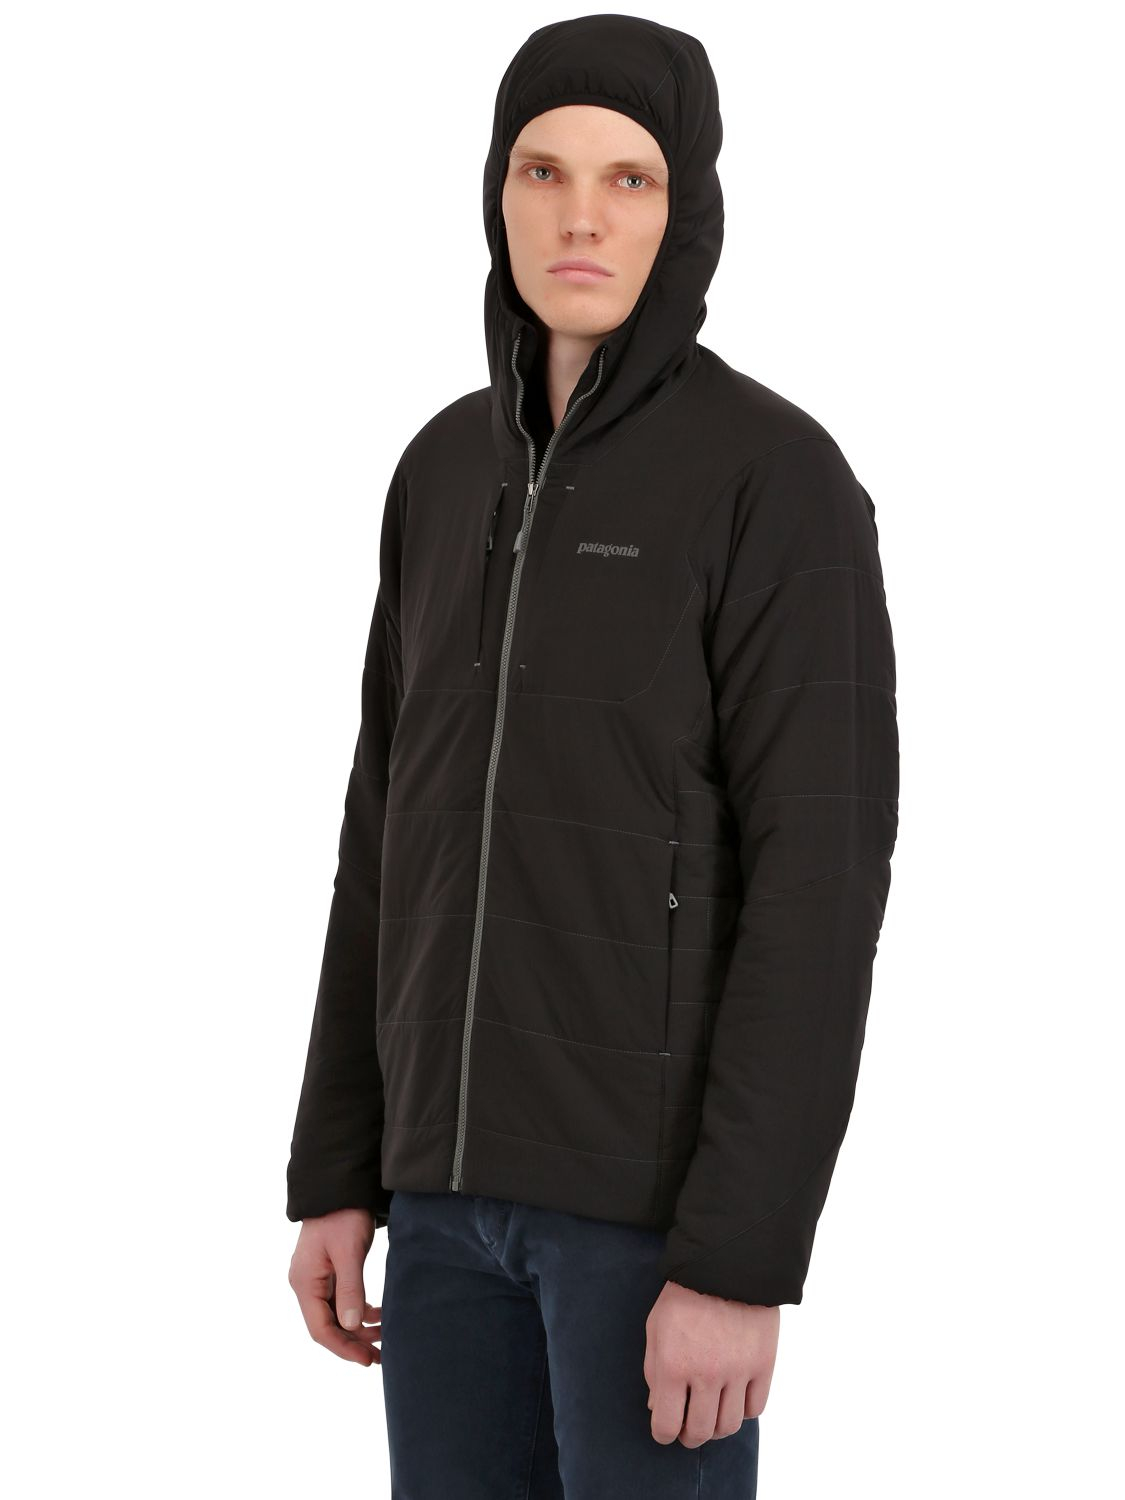 Patagonia Nano-Air Hoody Ripstop Nylon Jacket in Black for Men - Lyst